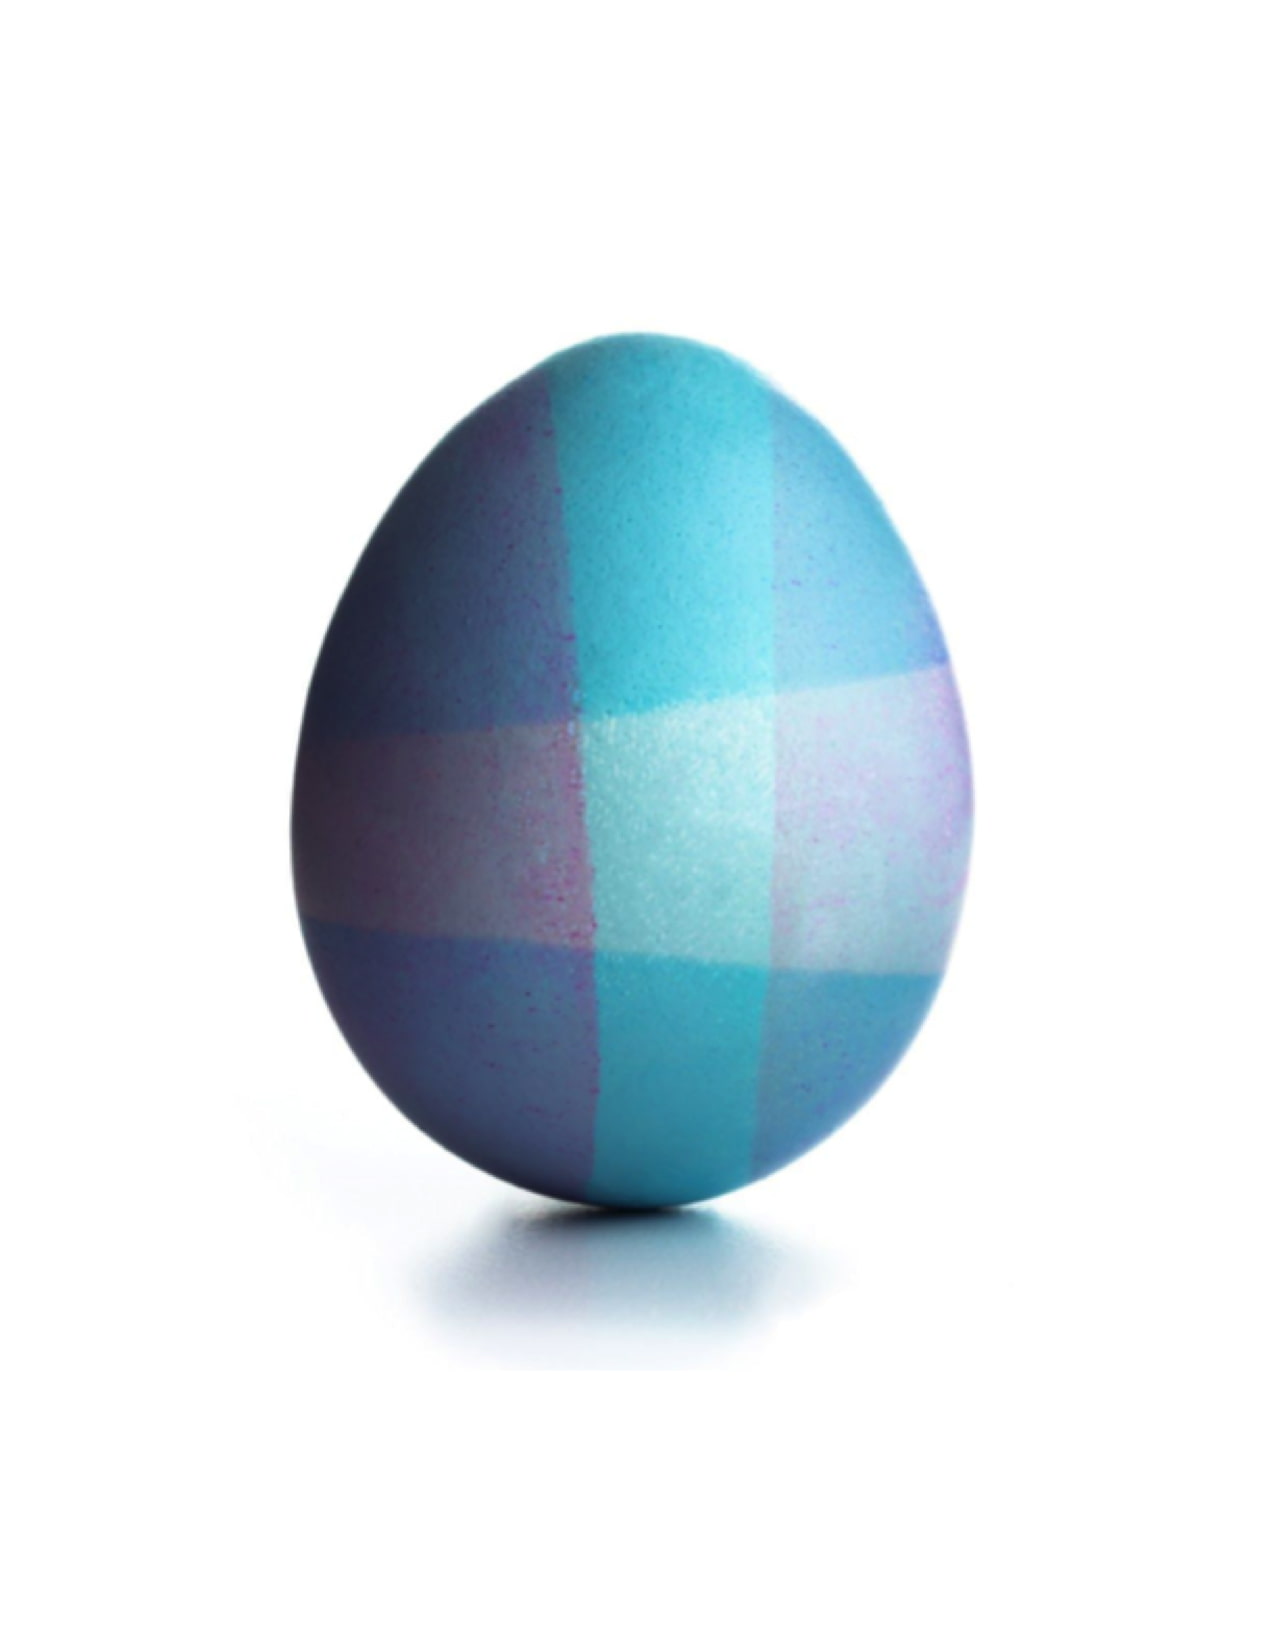 цветное яйцо на пасху